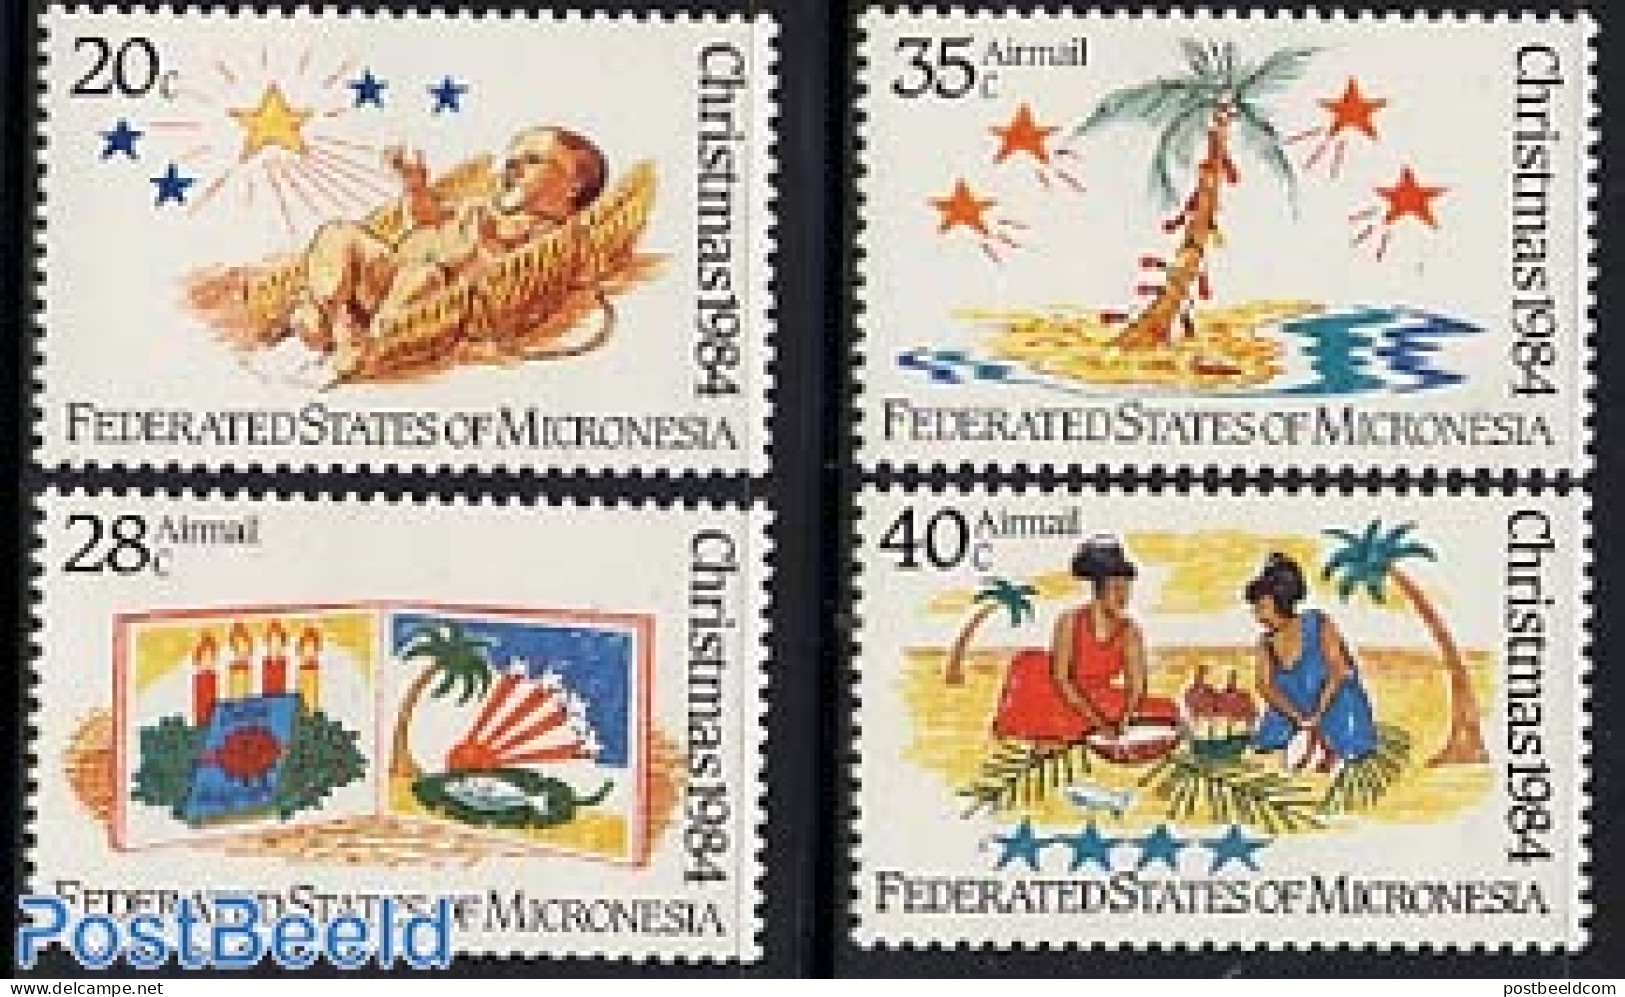 Micronesia 1984 Christmas 4v, Mint NH, Religion - Christmas - Noël